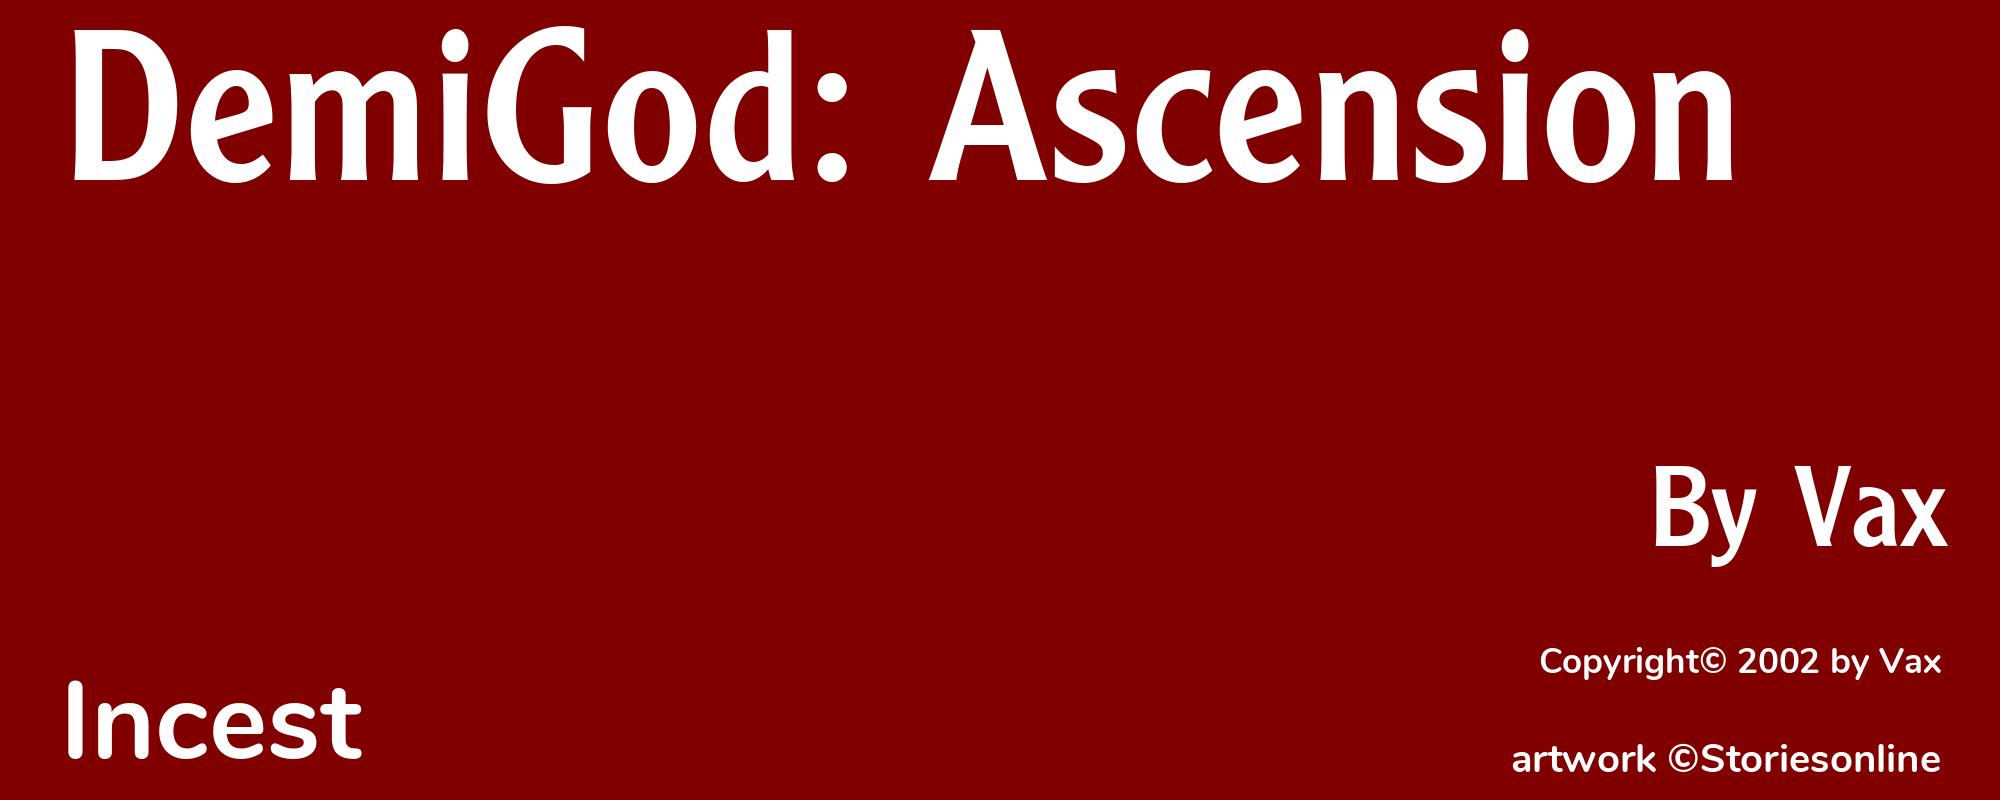 DemiGod: Ascension - Cover